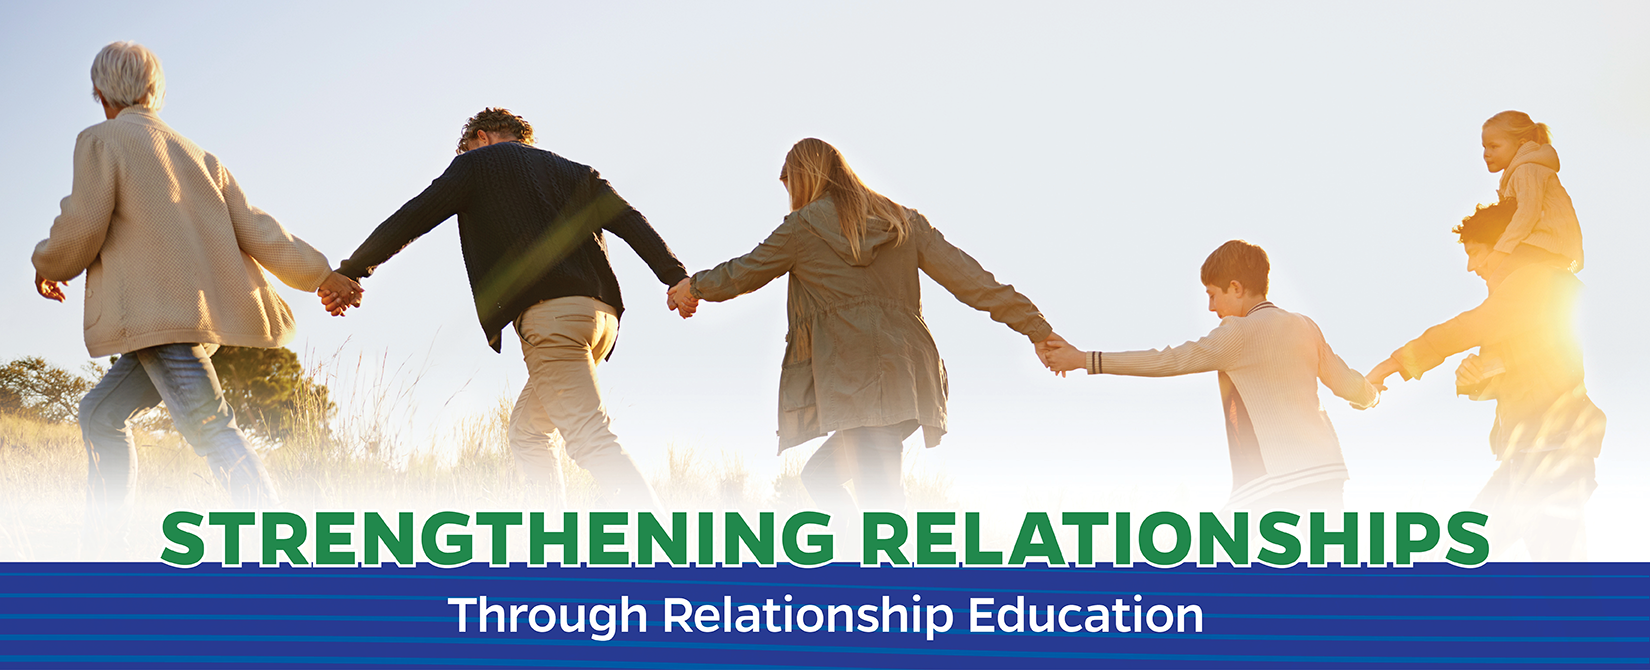 Strengthening Relationships Through Relationship Education